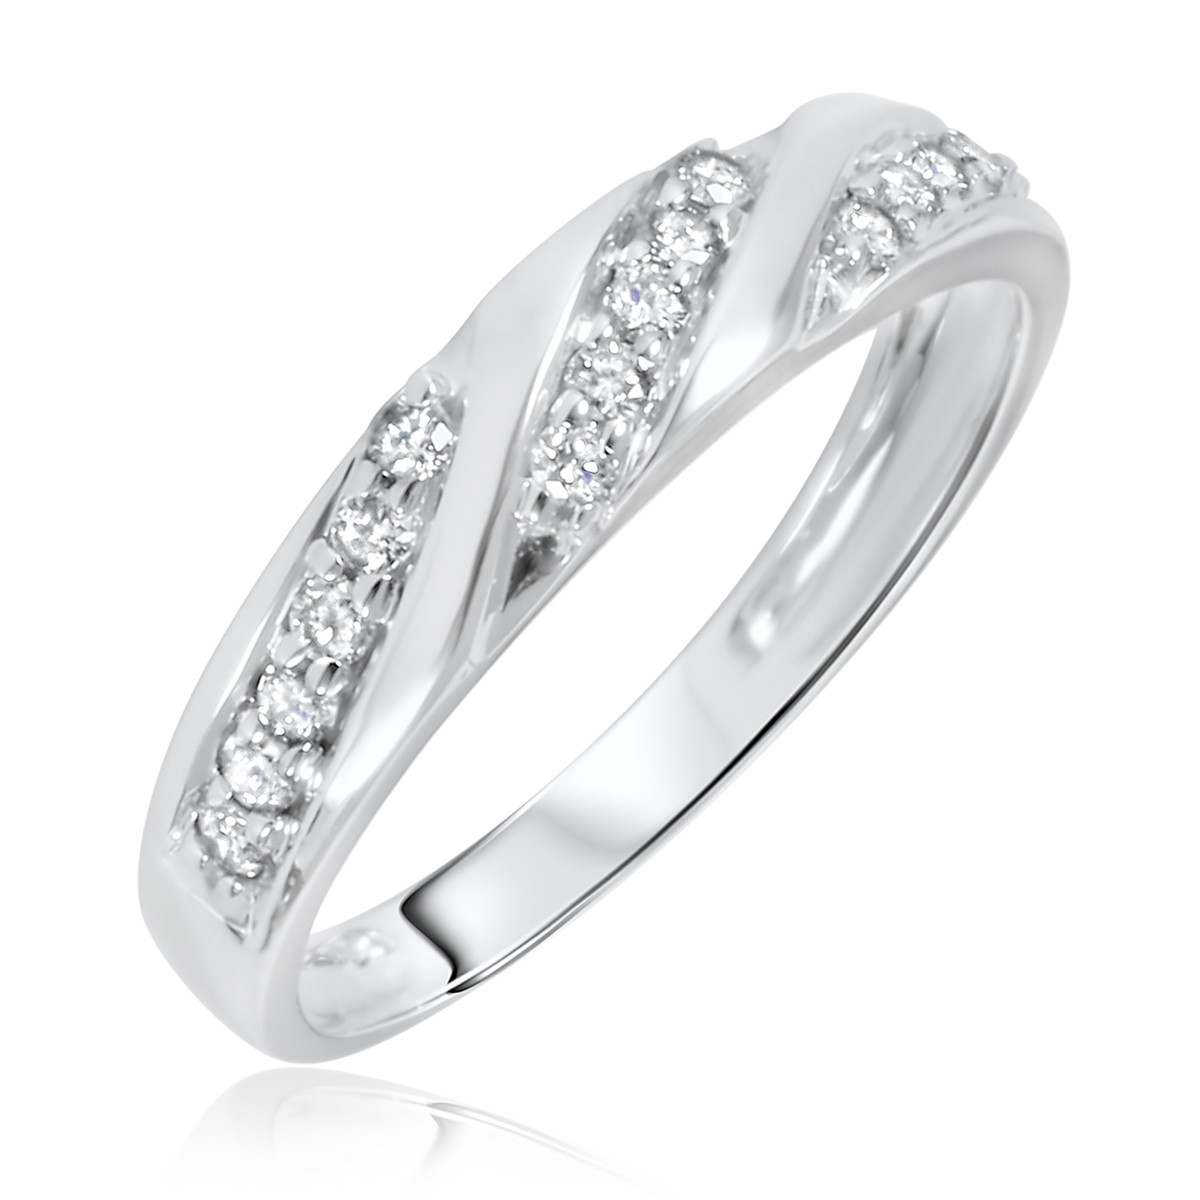 White Gold Wedding Rings
 1 4 Carat T W Diamond Women s Wedding Ring 14K White Gold